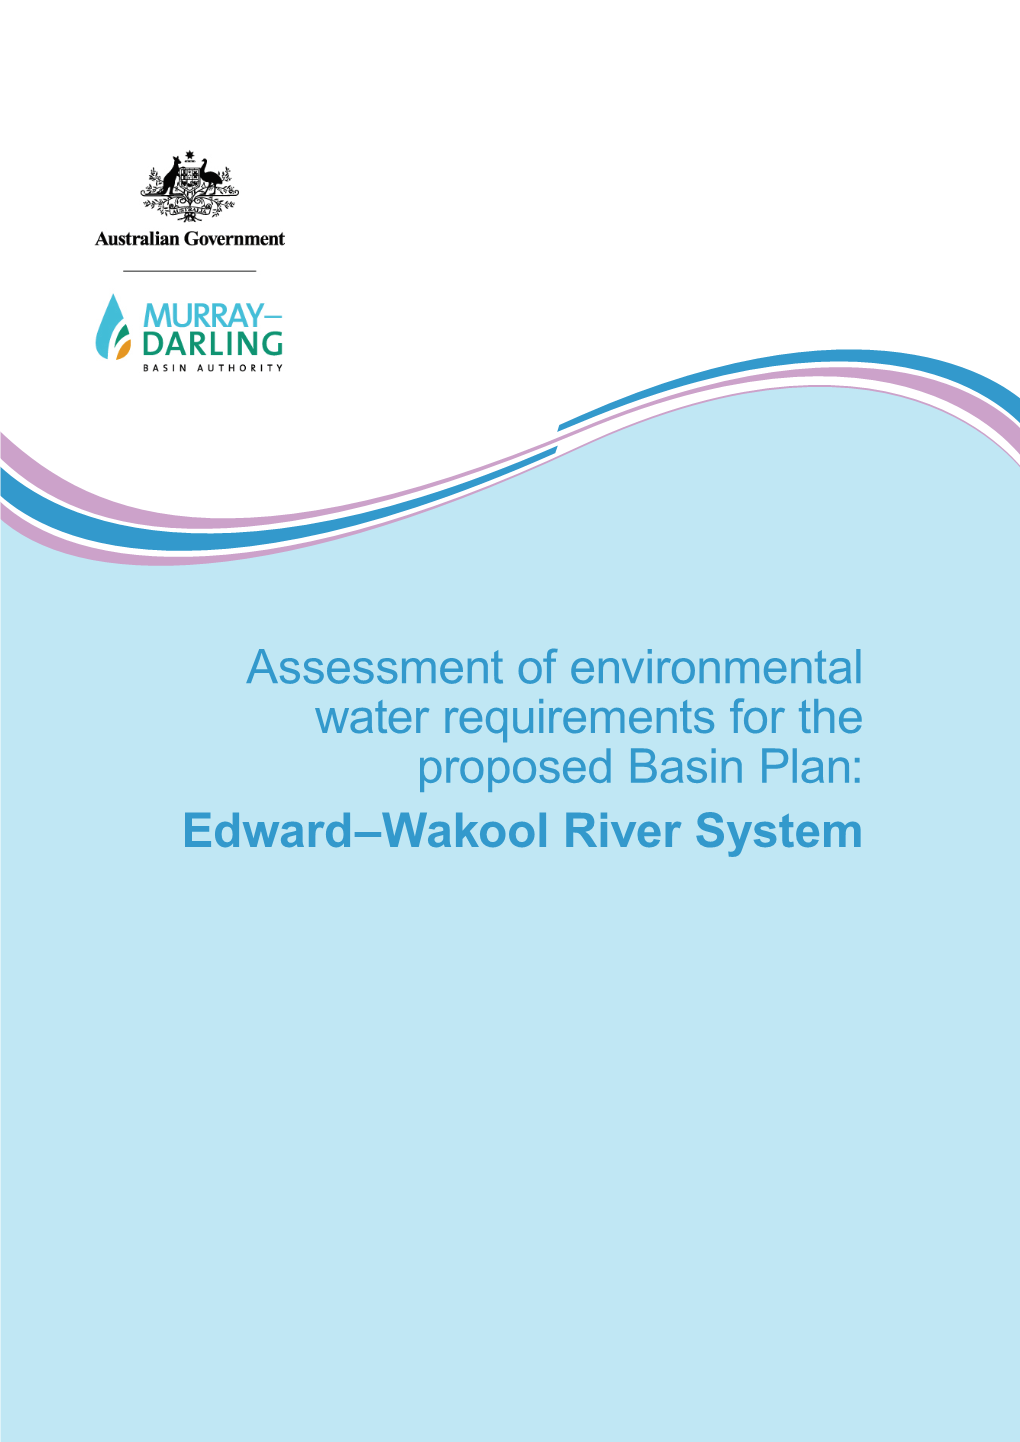 Edward–Wakool River System